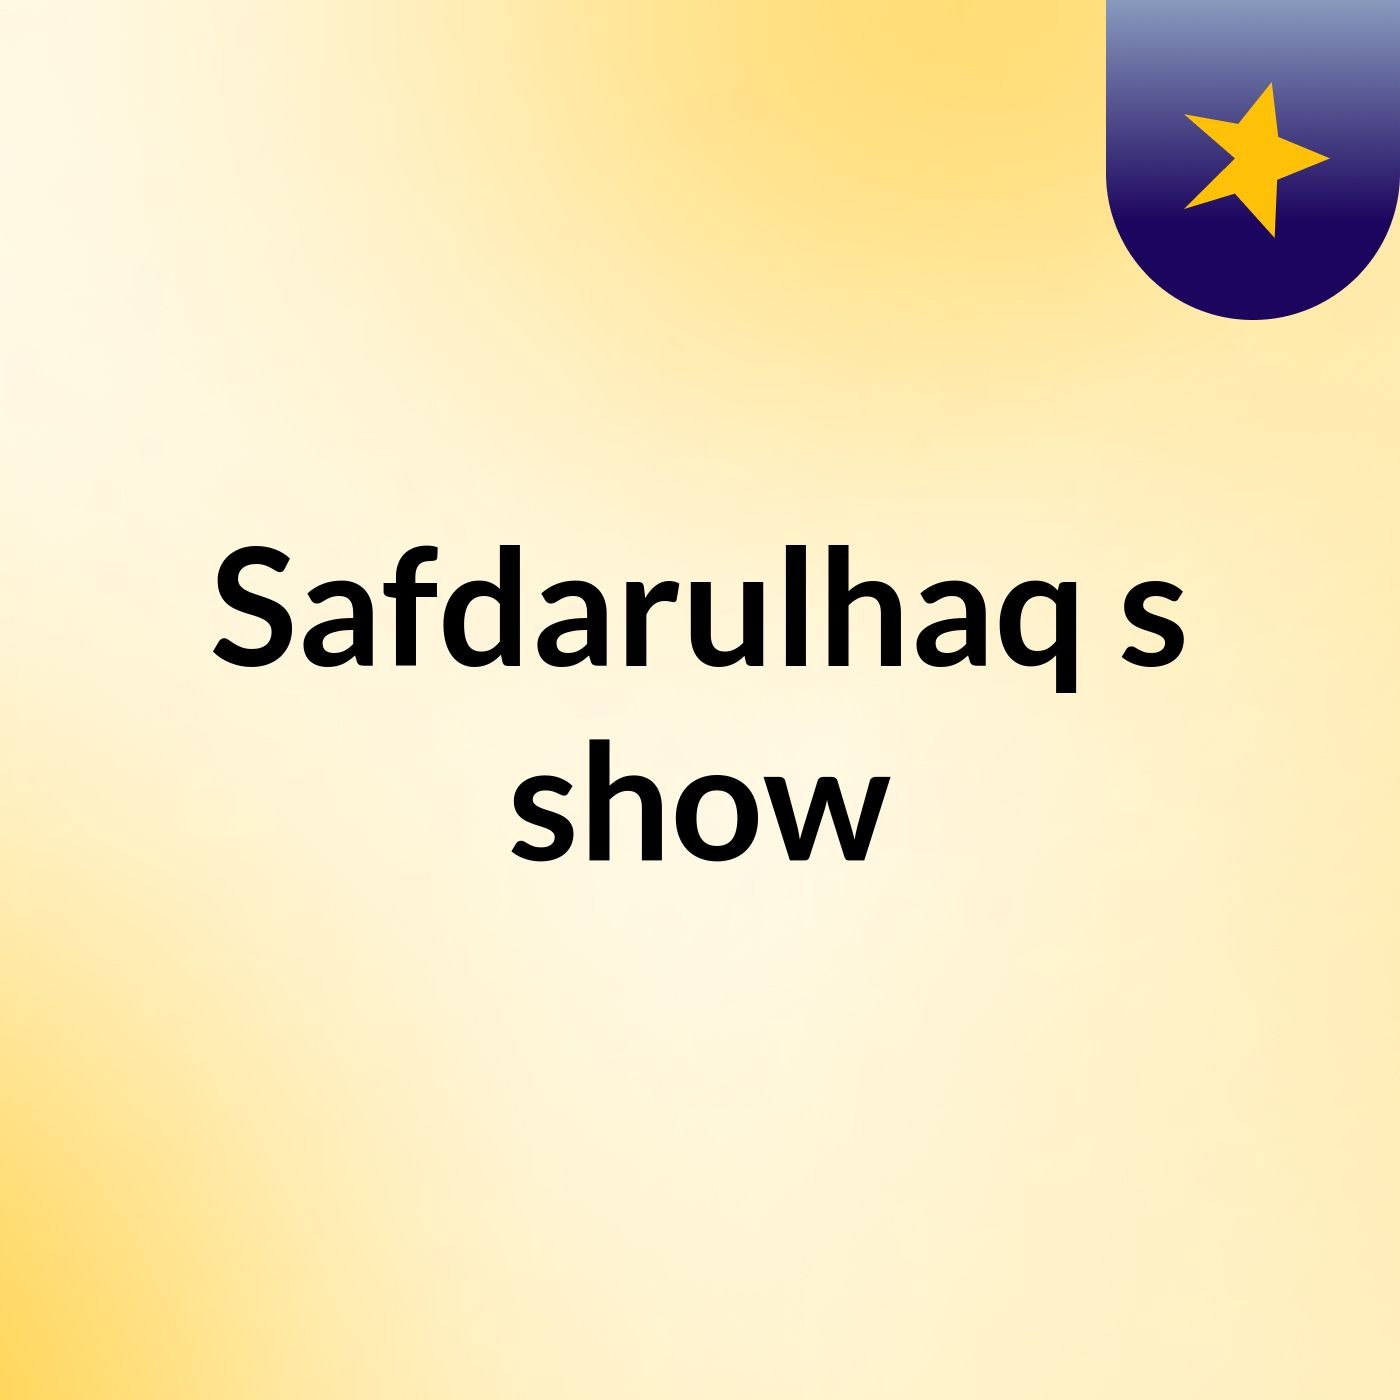 Safdarulhaq's show